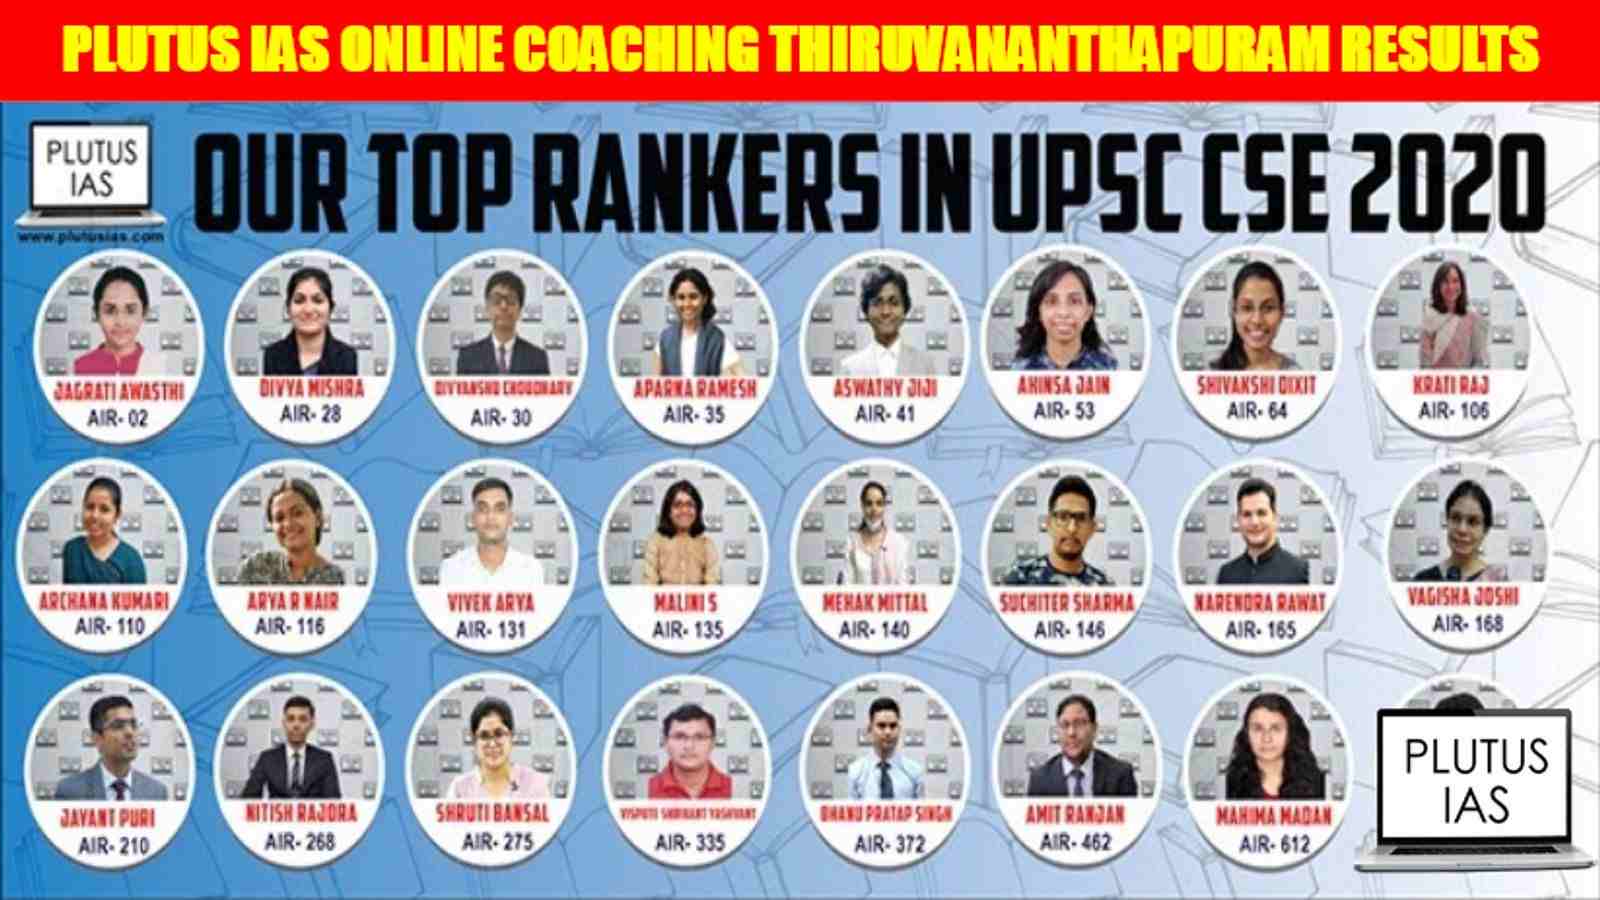 Plutus IAS Online Coaching Thiruvananthapuram Results